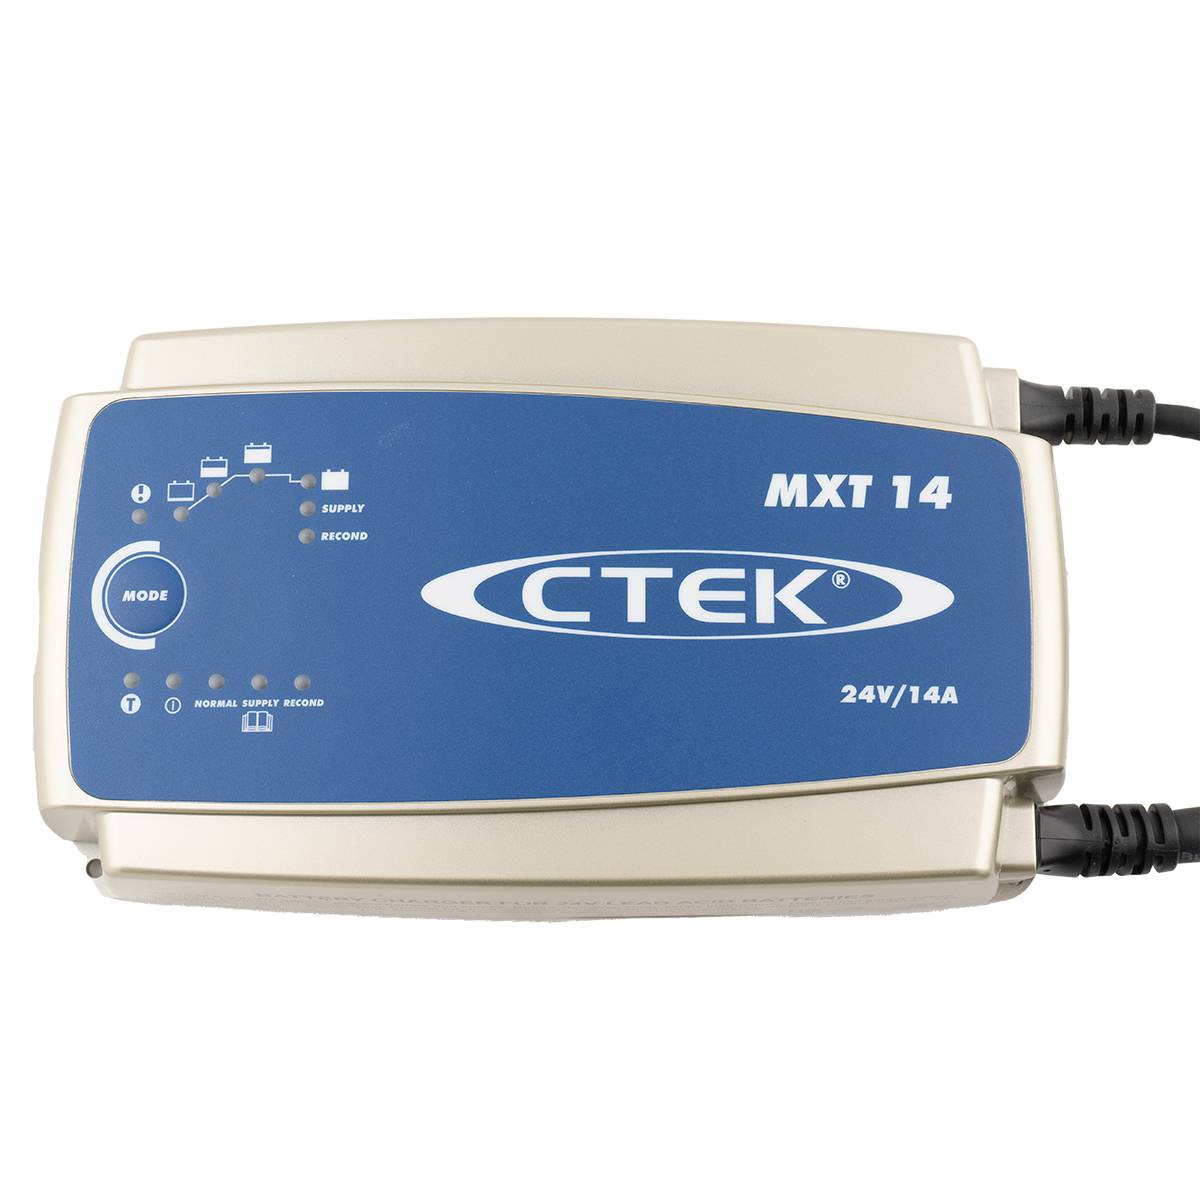 CTEK XS 0.8 Batterie Ladegerät 12V 800mA für Bleiakkus